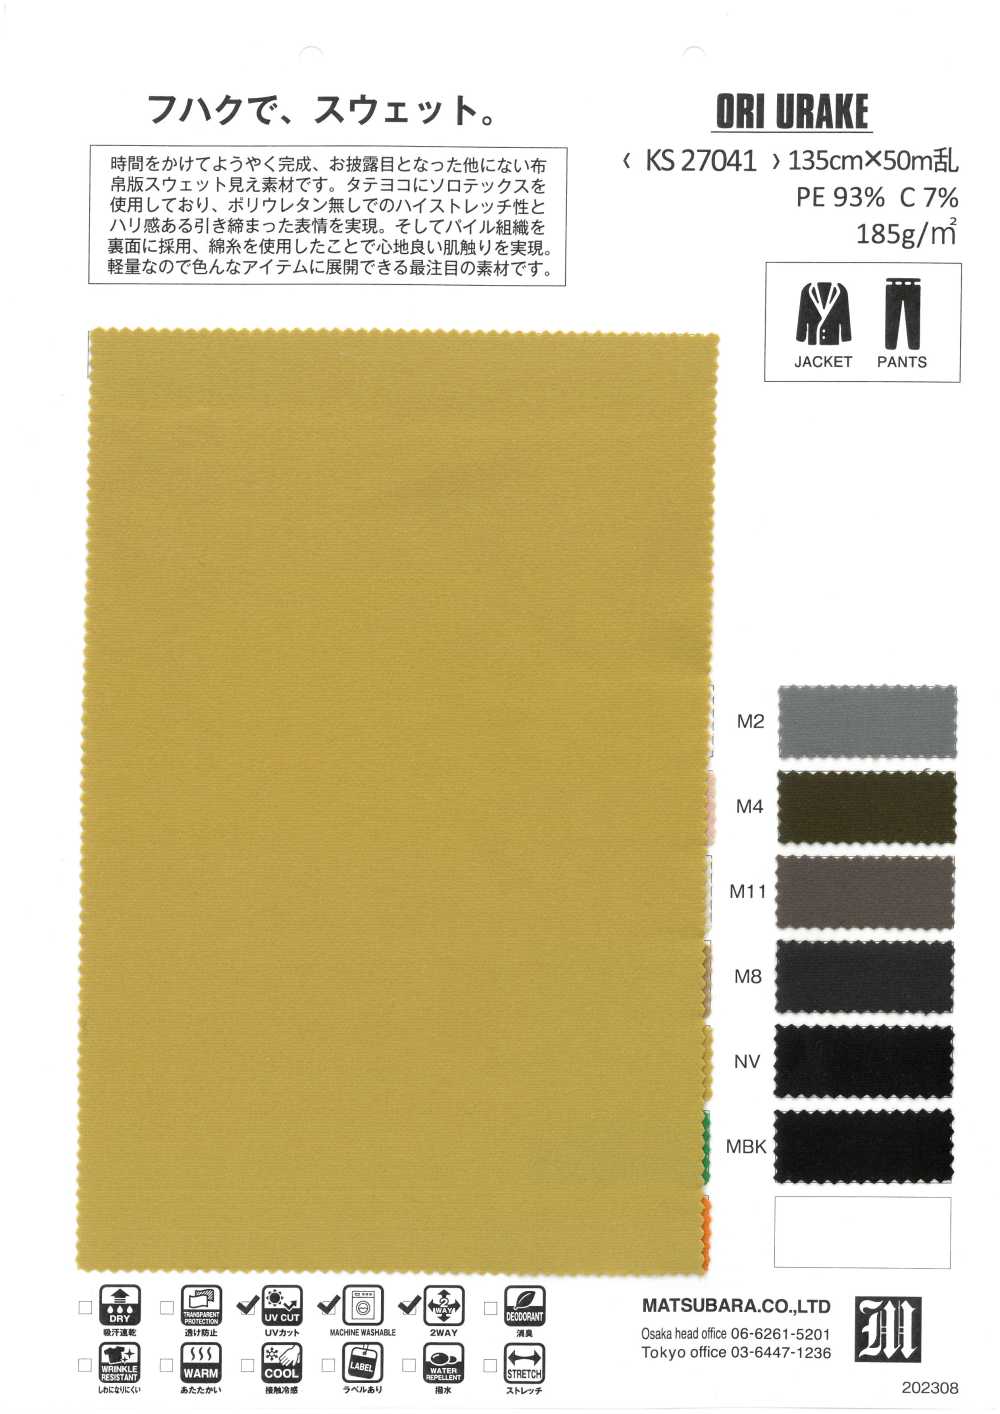 KS27041 ORI URAKE[Textile / Fabric] Matsubara